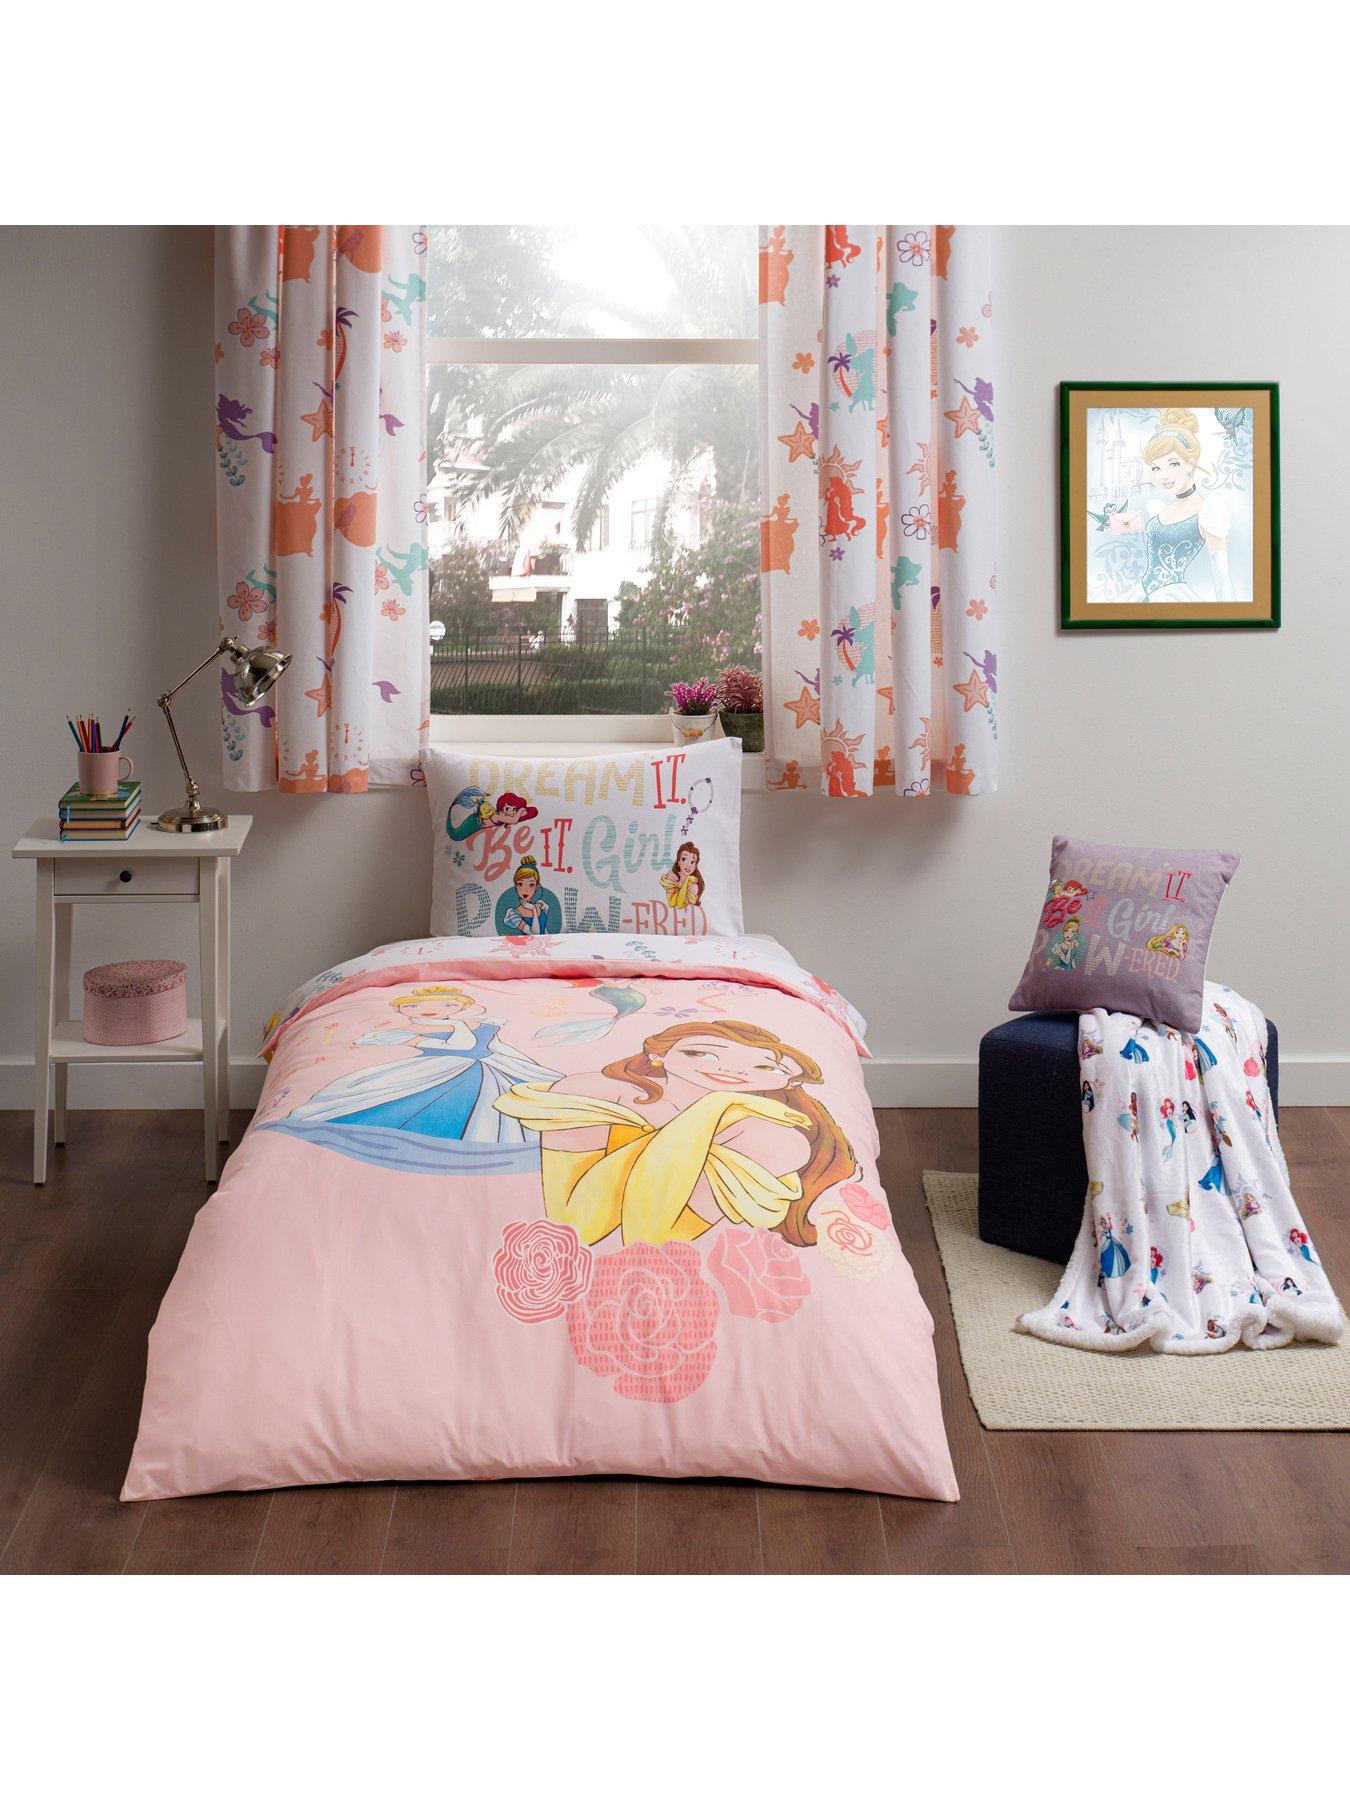 Disney Winnie the Pooh Kids Bedroom Storage Unit with 6 Bins by HelloHome